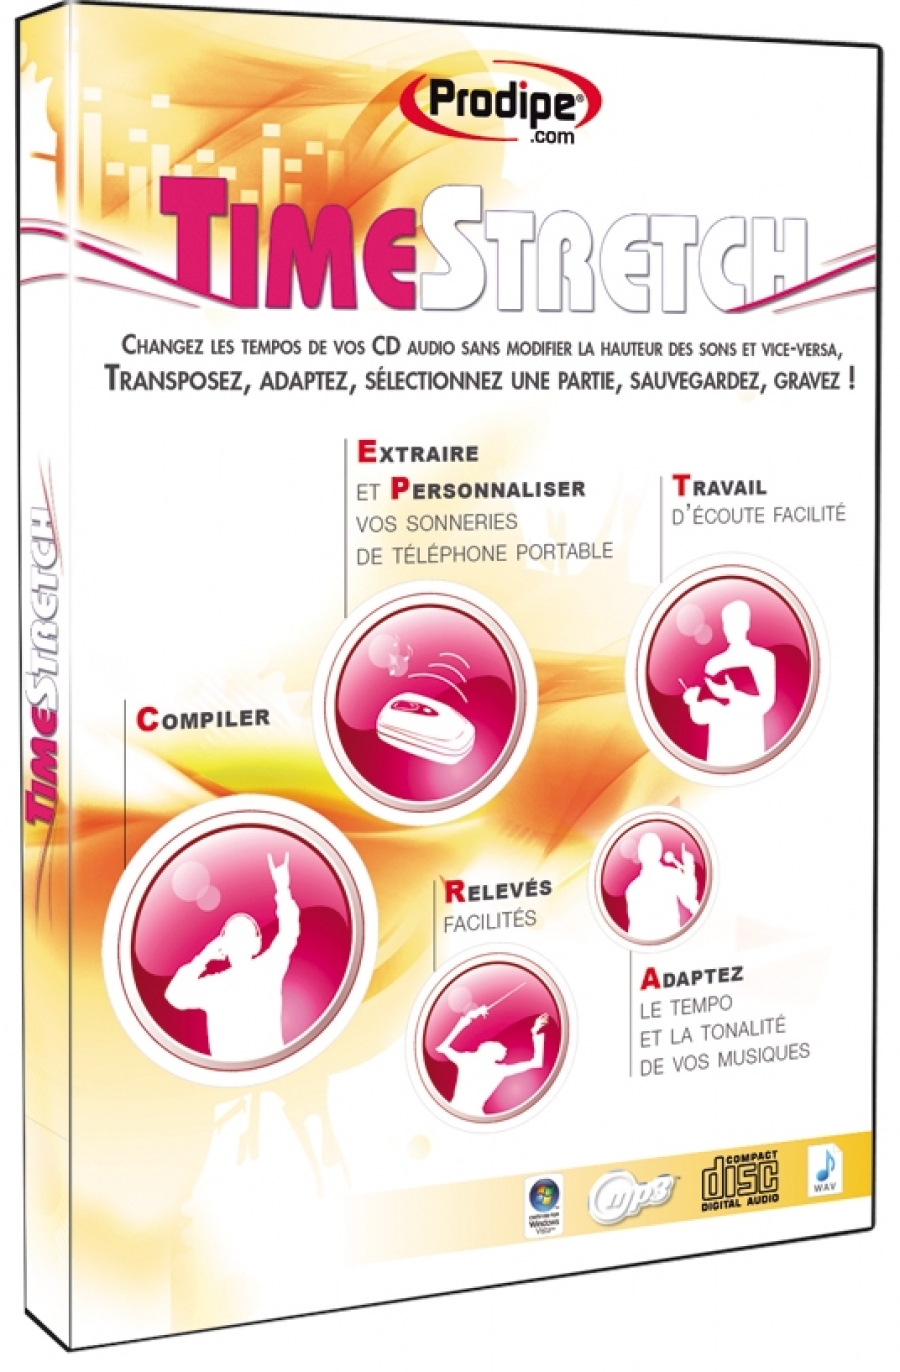 Prodipe Time stretch - DVD-ROM Logiciel IPE Music de traitement audio FR (PC)